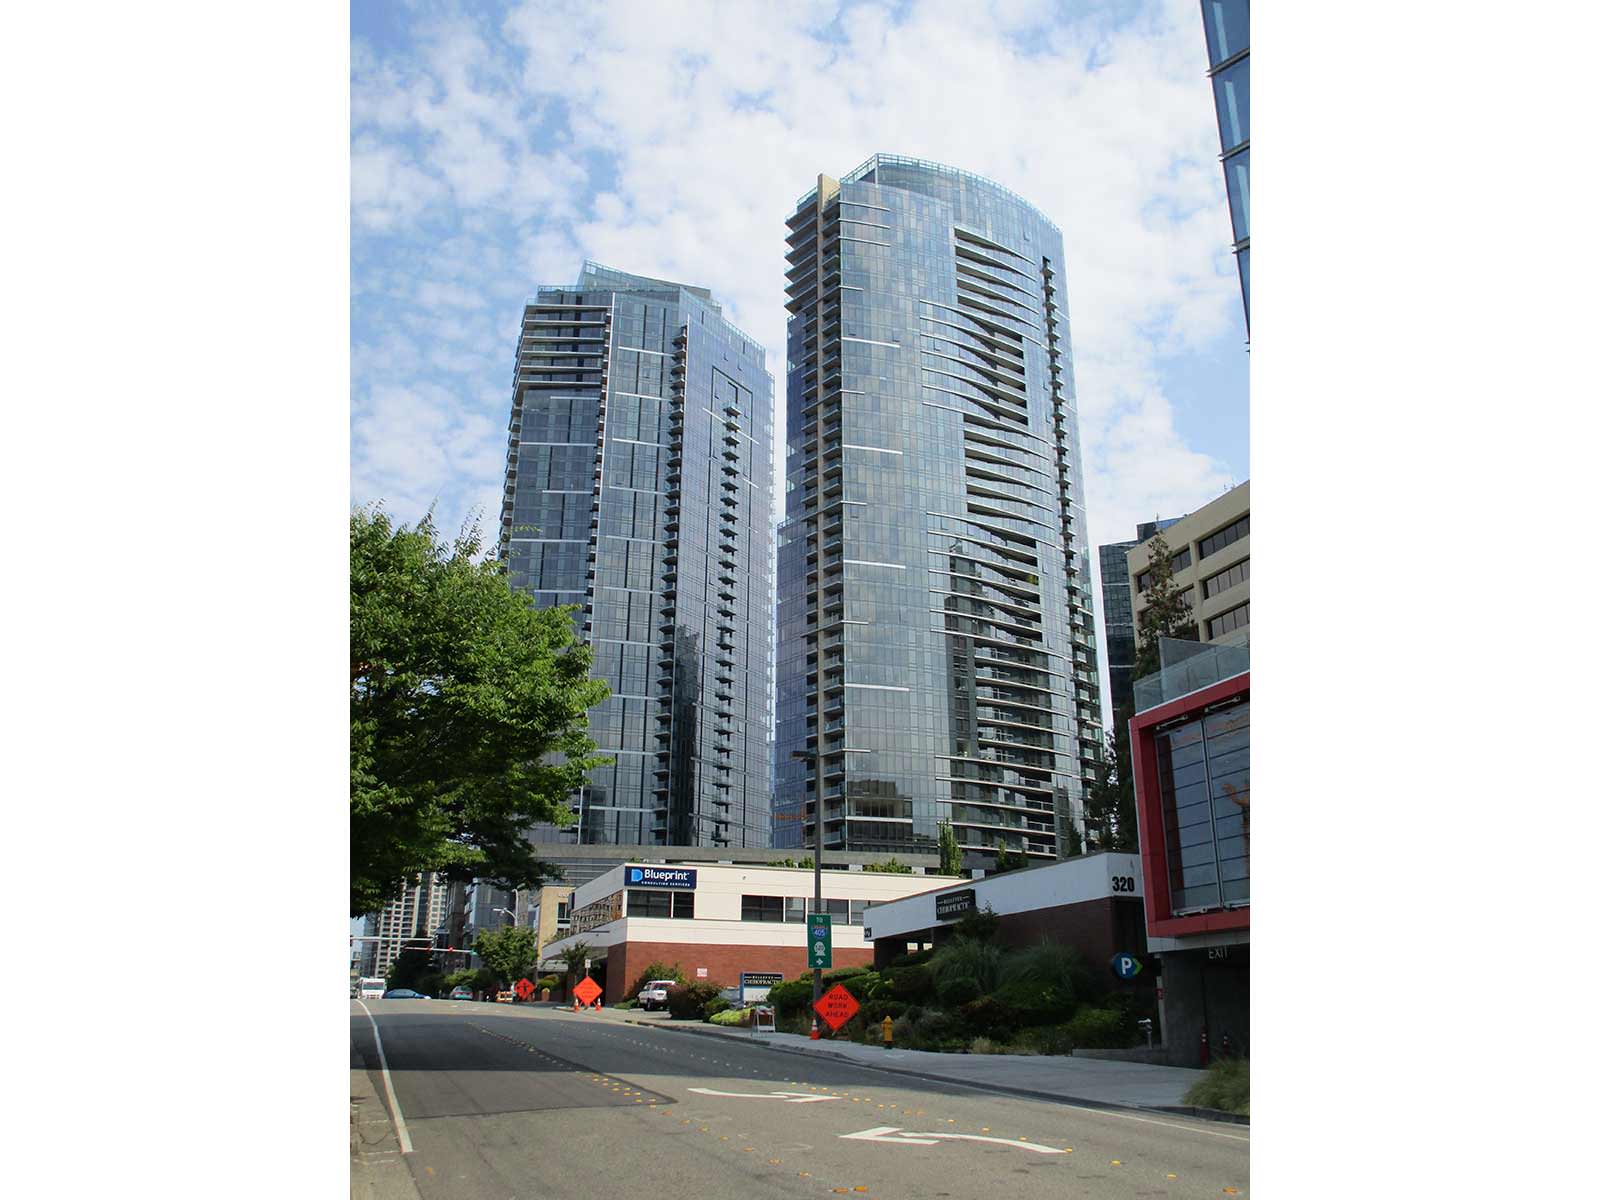 Bellevue Towers